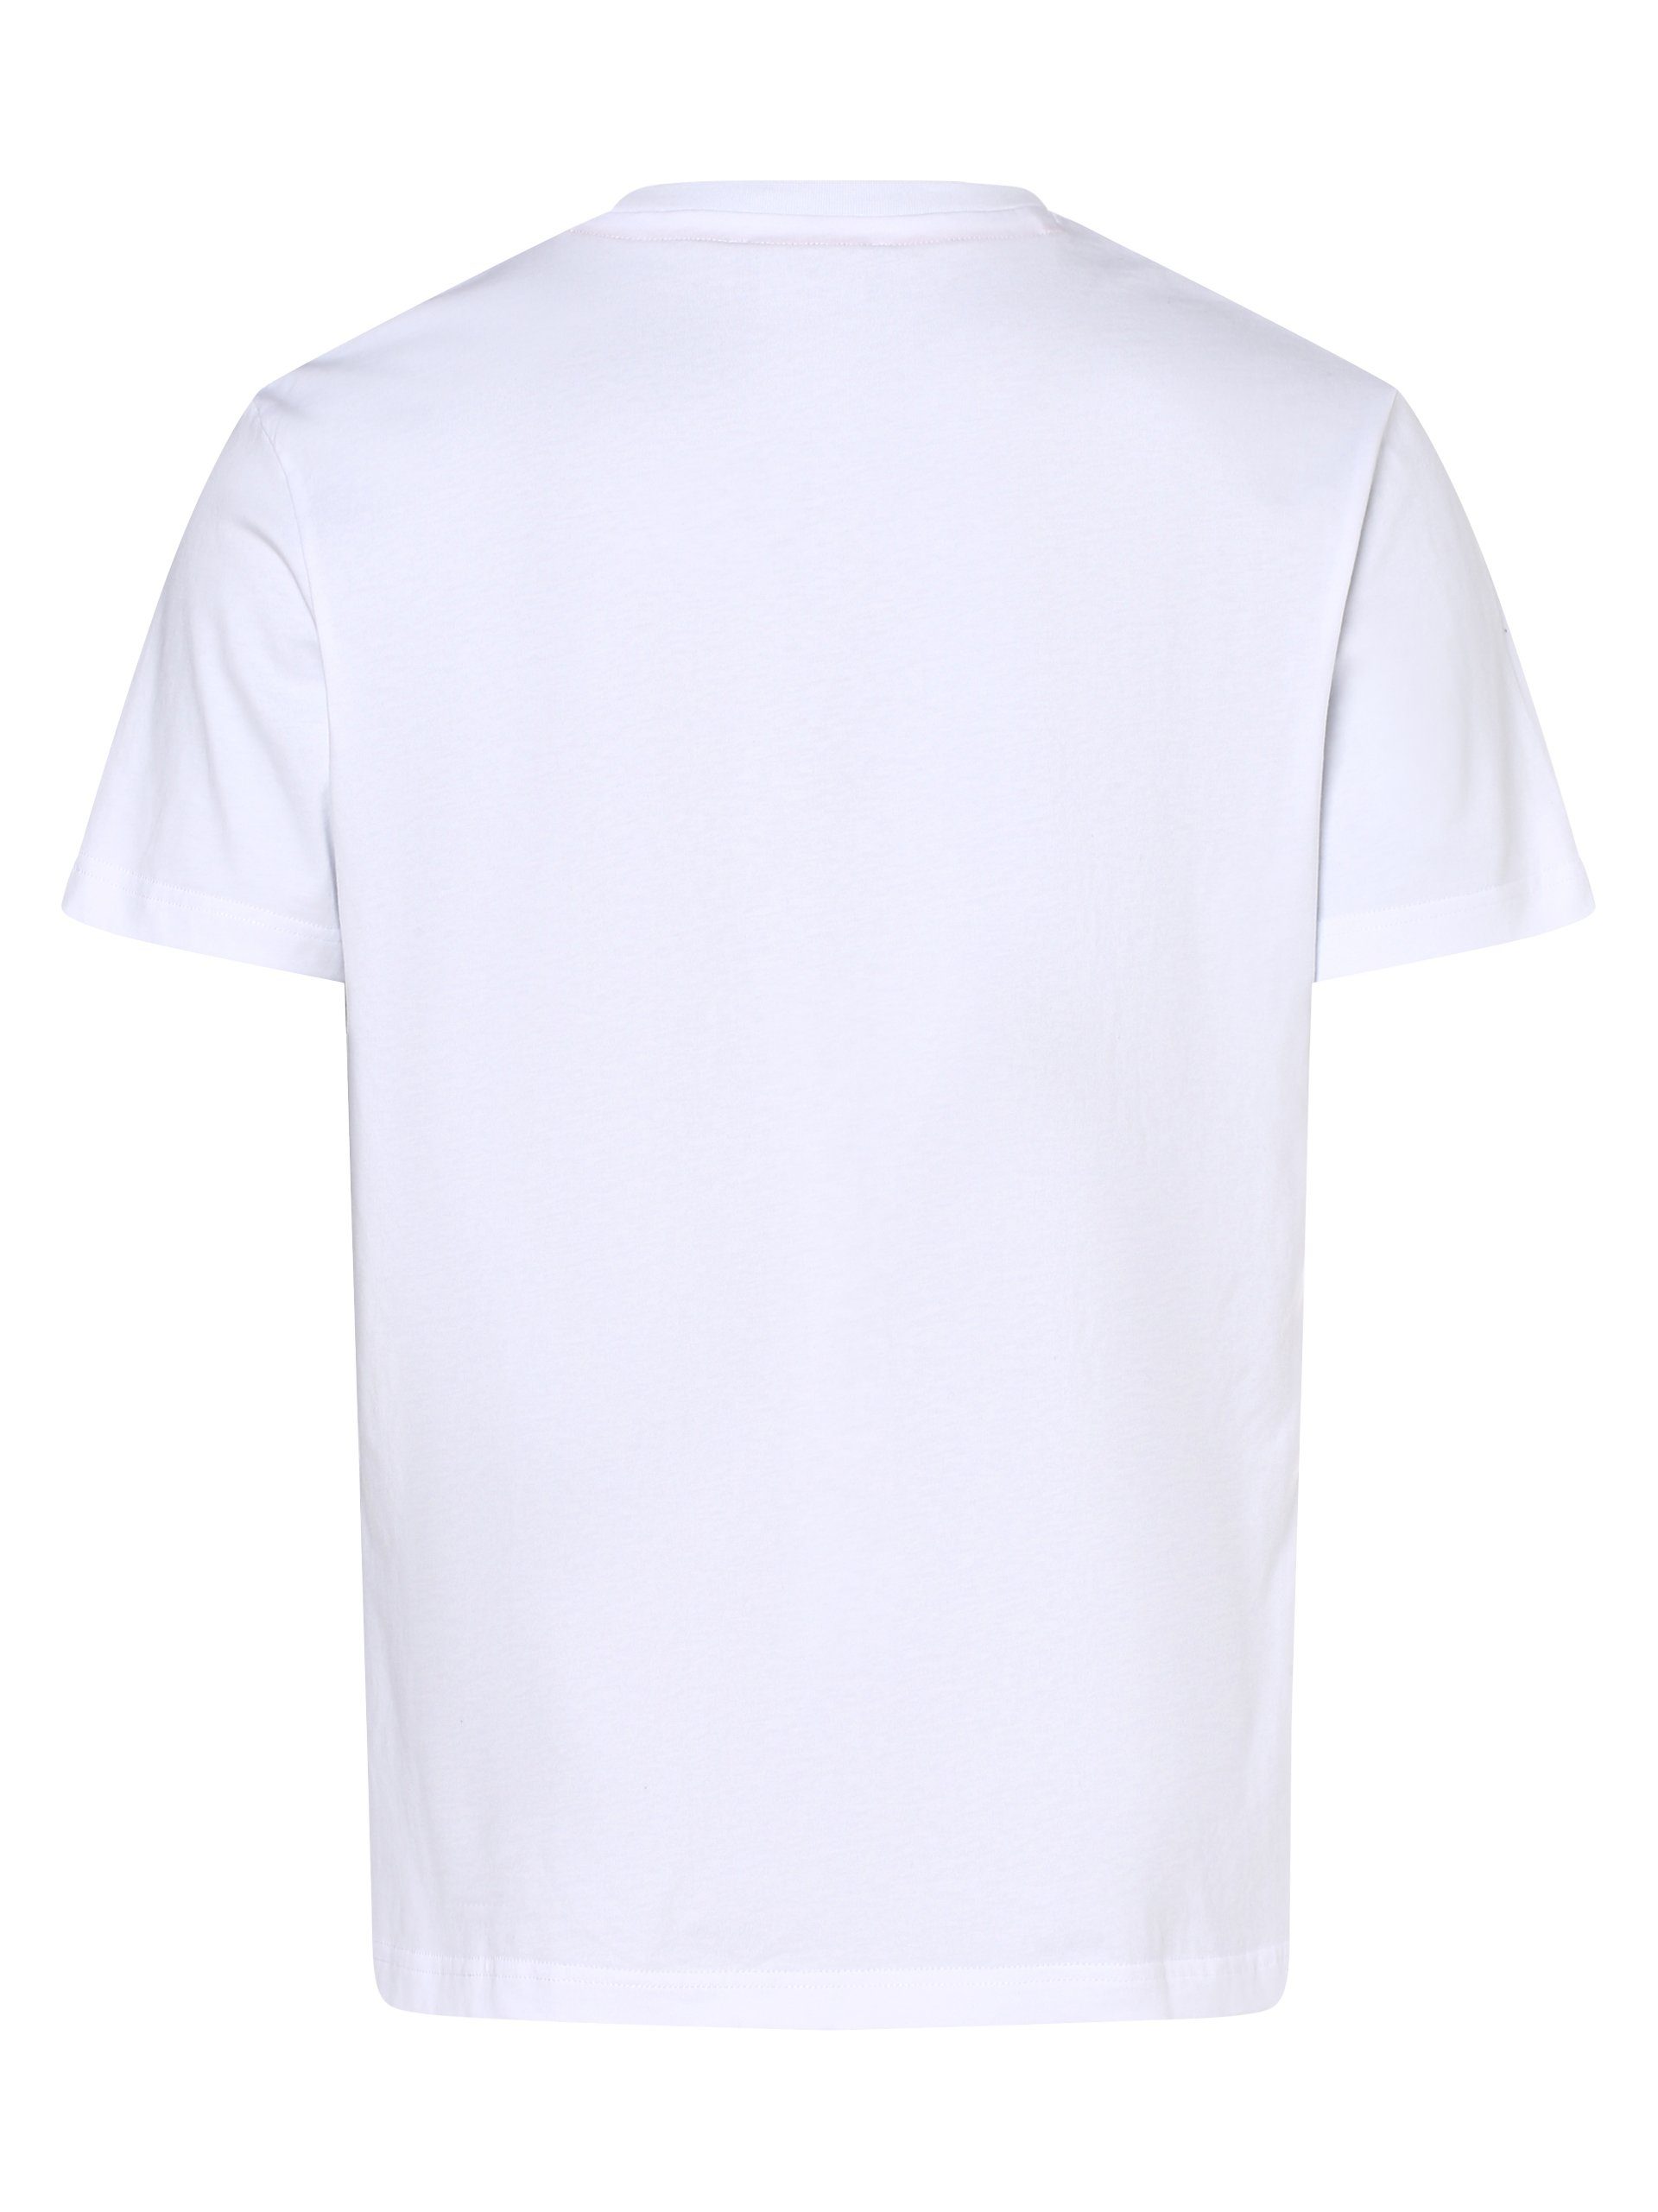 19V69 Nilo weiß T-Shirt by Italia Italia 19V69 Versace